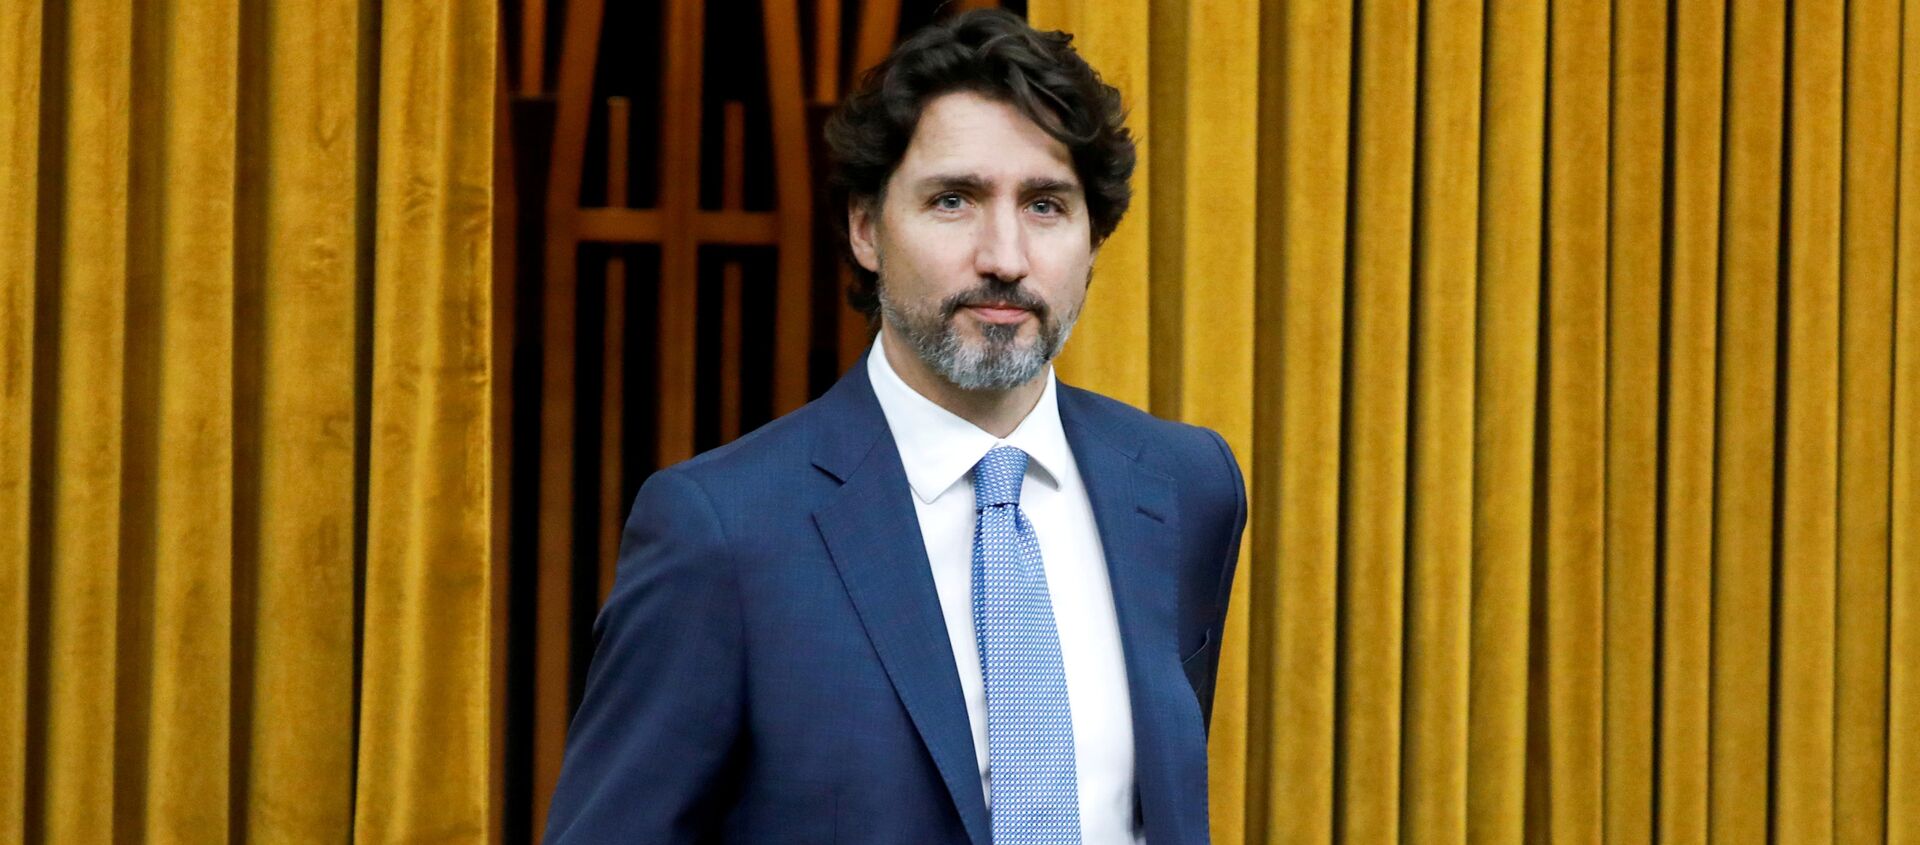 Justin Trudeau, primer ministro de Canadá - Sputnik Mundo, 1920, 19.06.2020